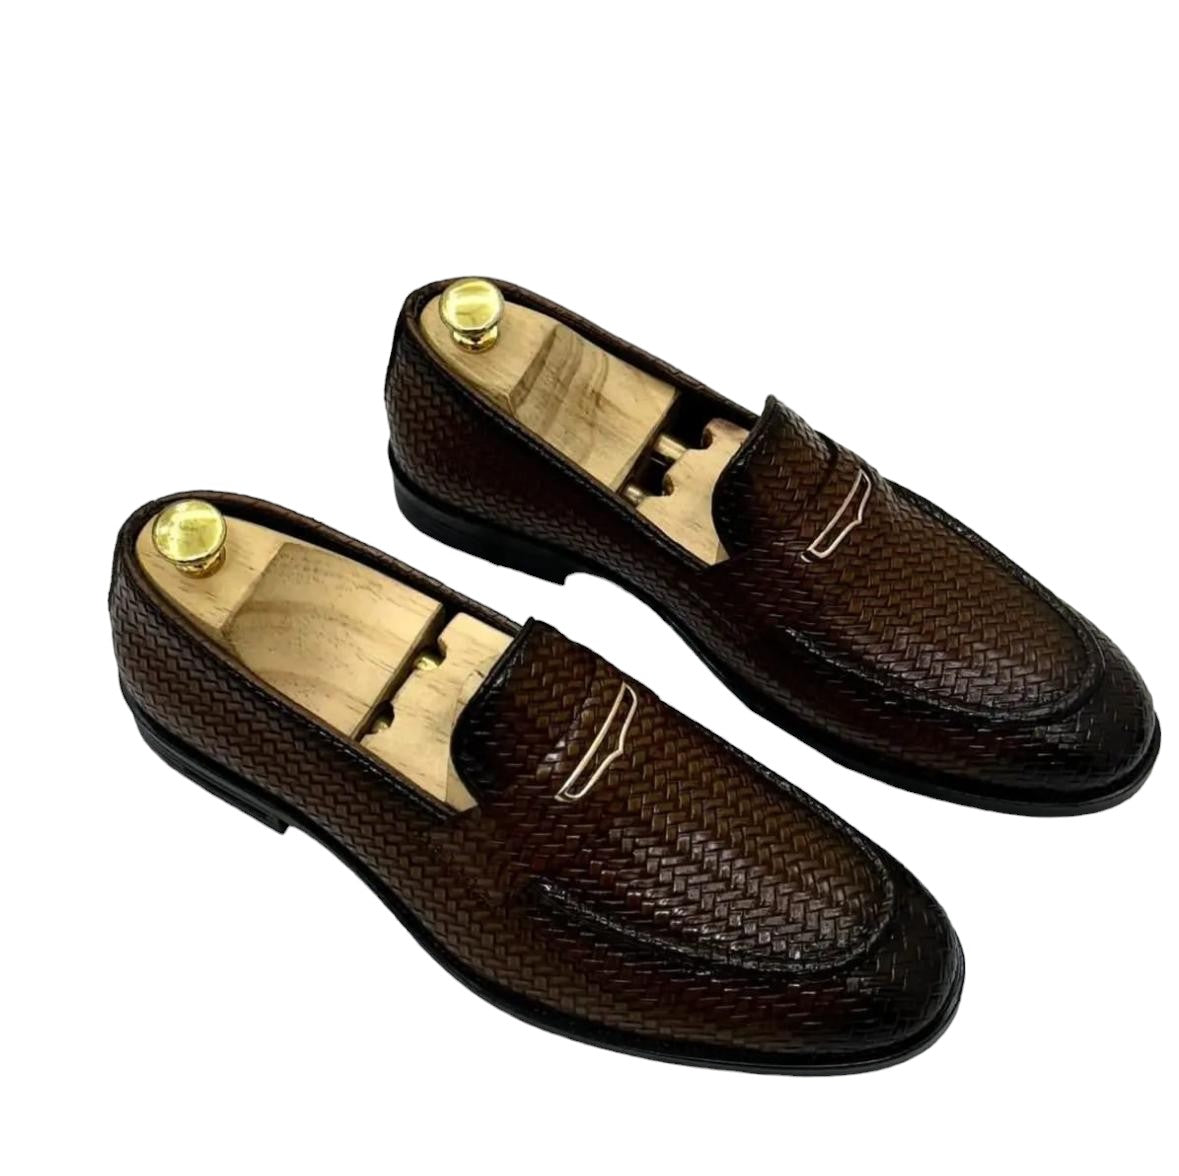 Jack Marc Premium Croco Loafers for Men - JACKMARC.COM